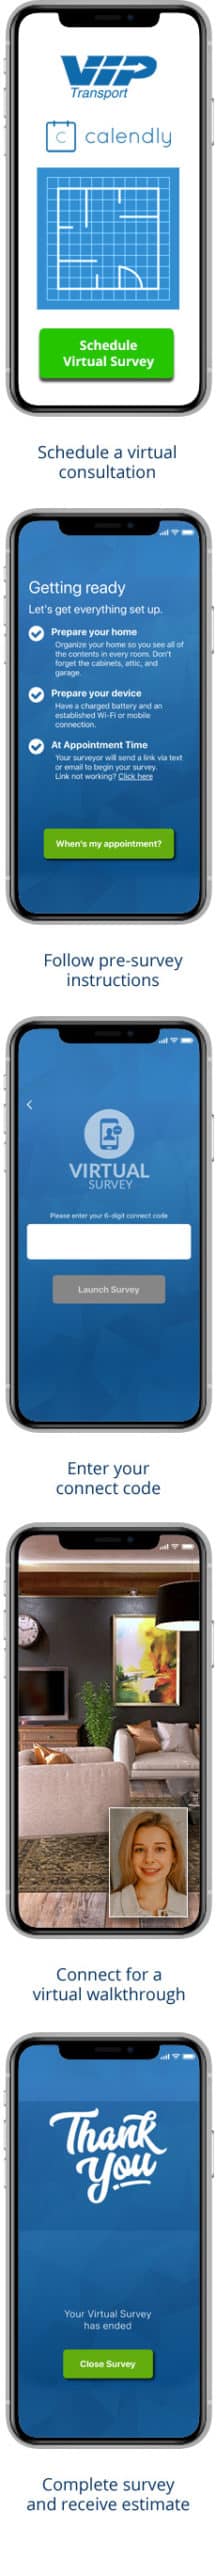 virtual-survey-phone-new02-vert